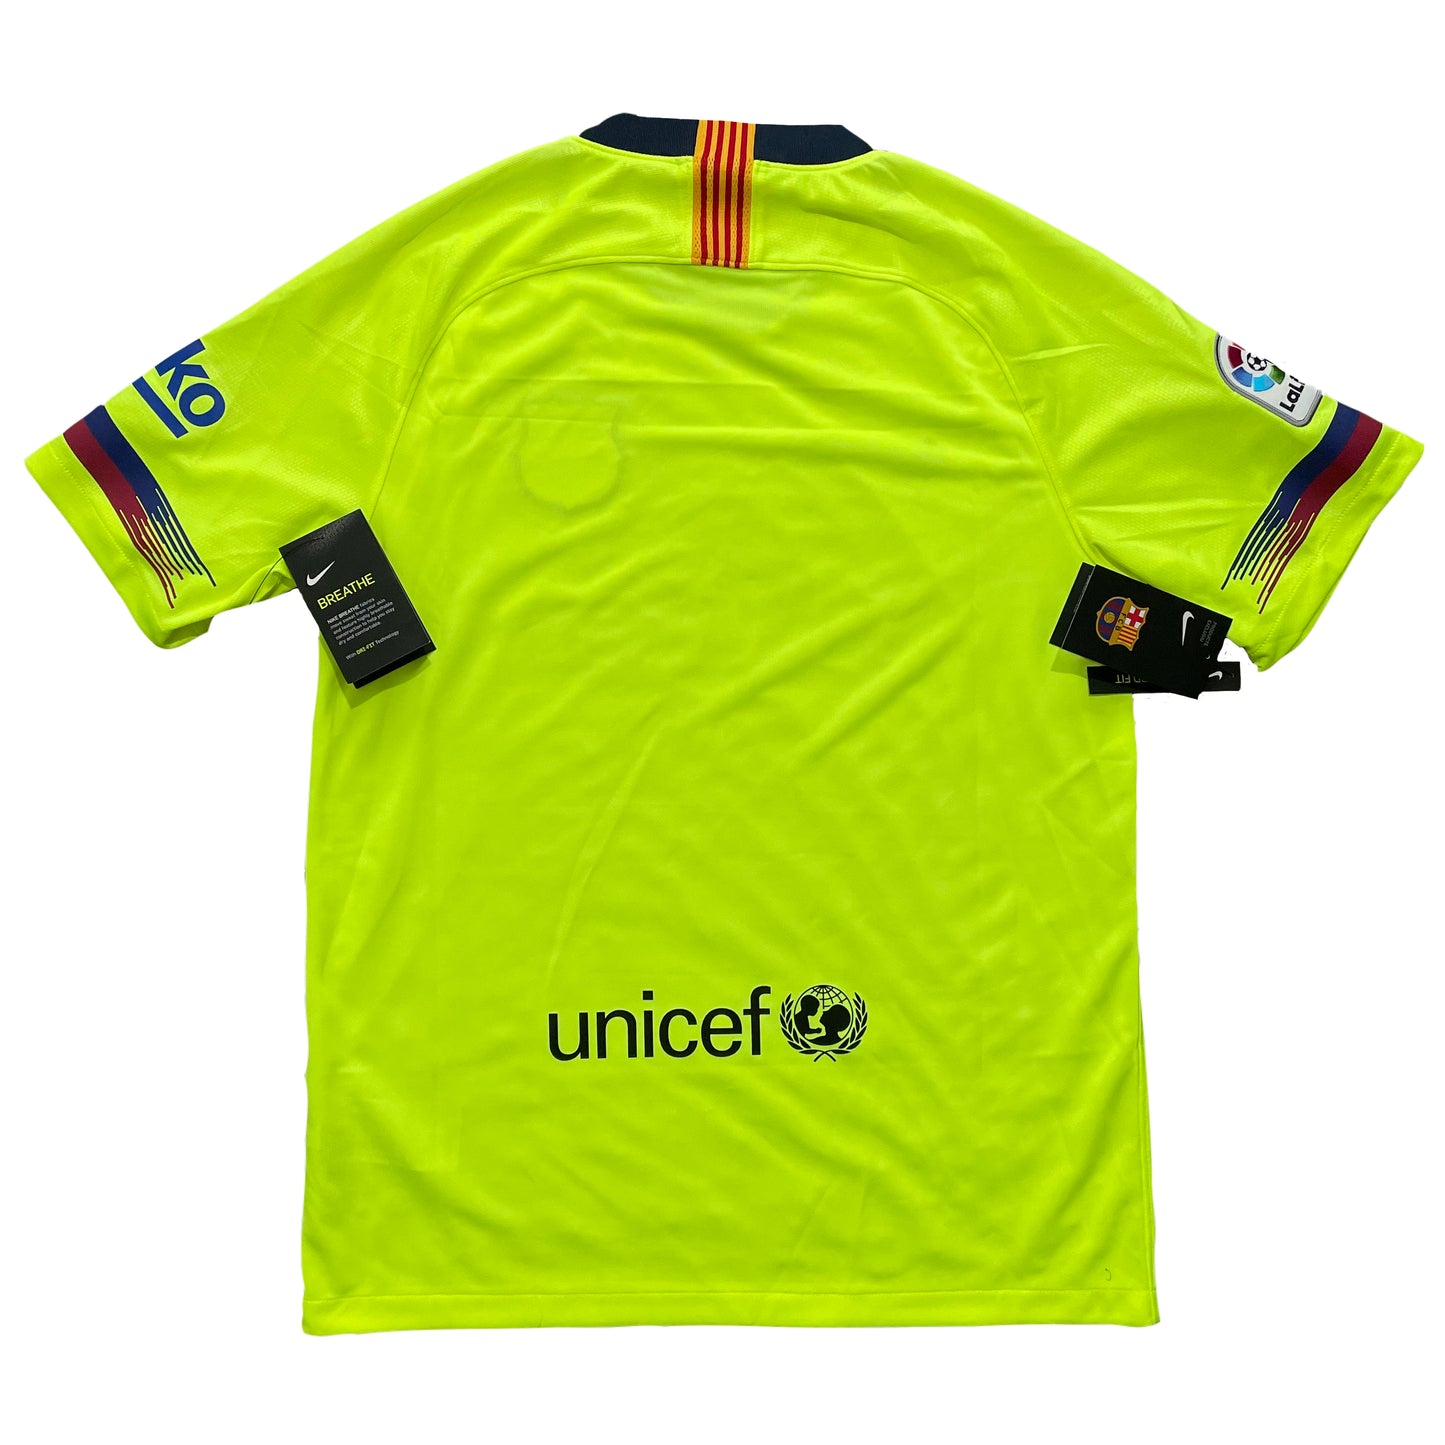 2018-2019 FC Barcelona away shirt (S, M)